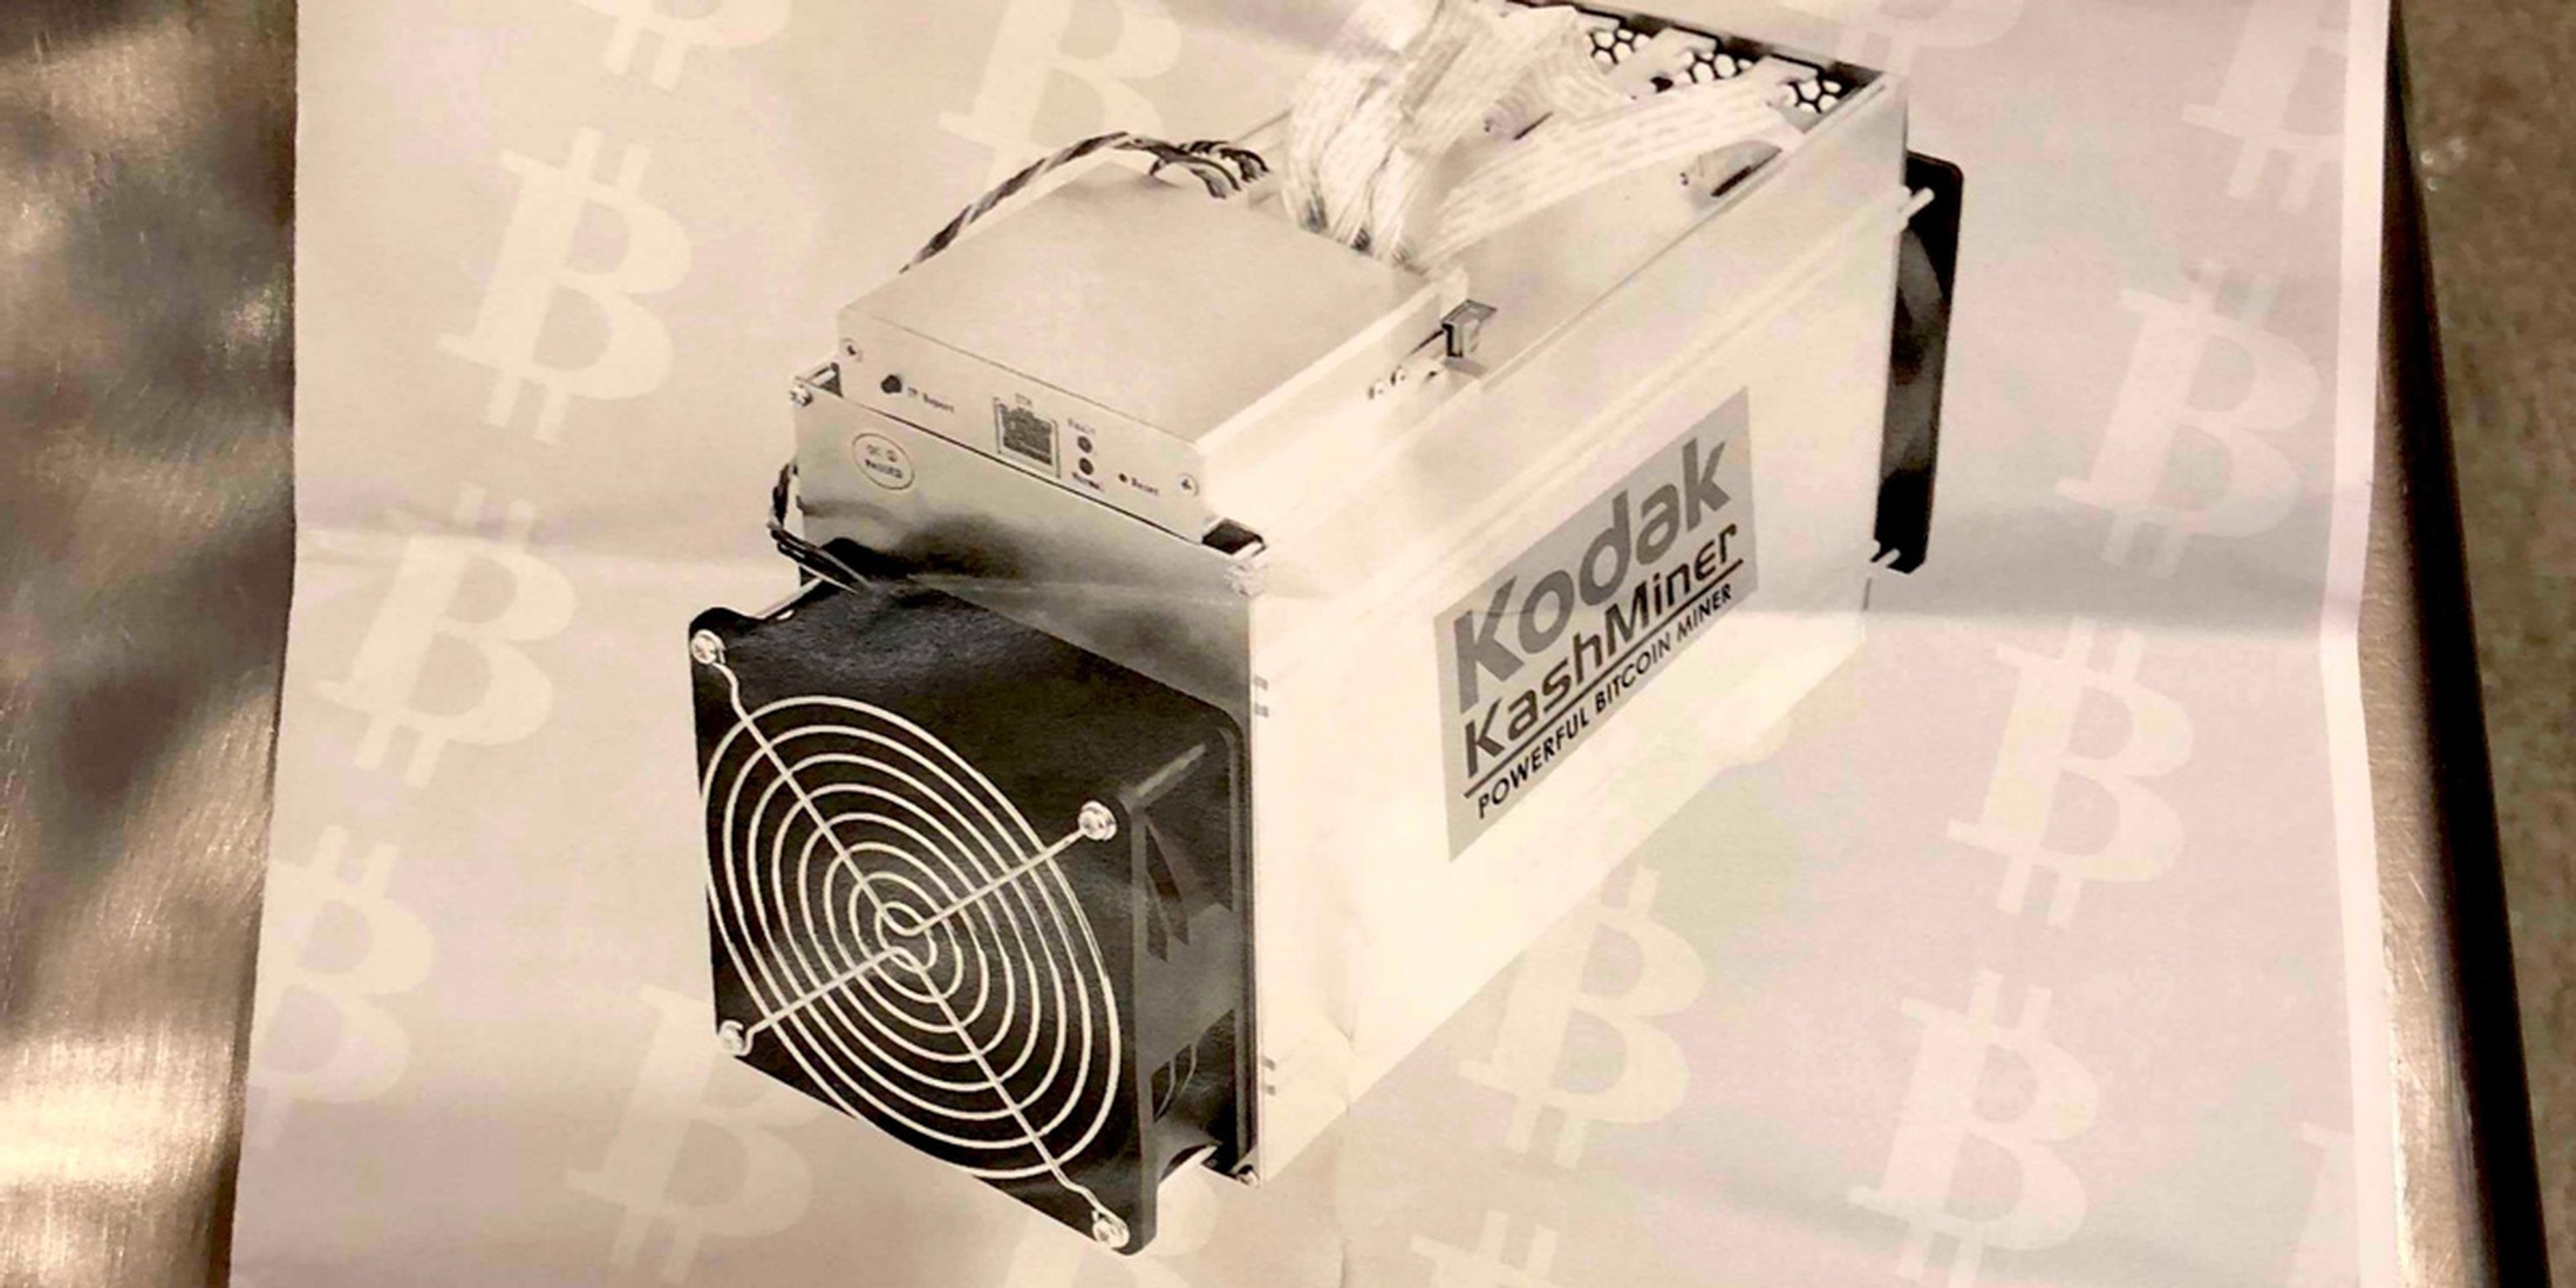 Un folleto promocional de la nueva máquina de minado de bitcoins Kashminer de Kodak.